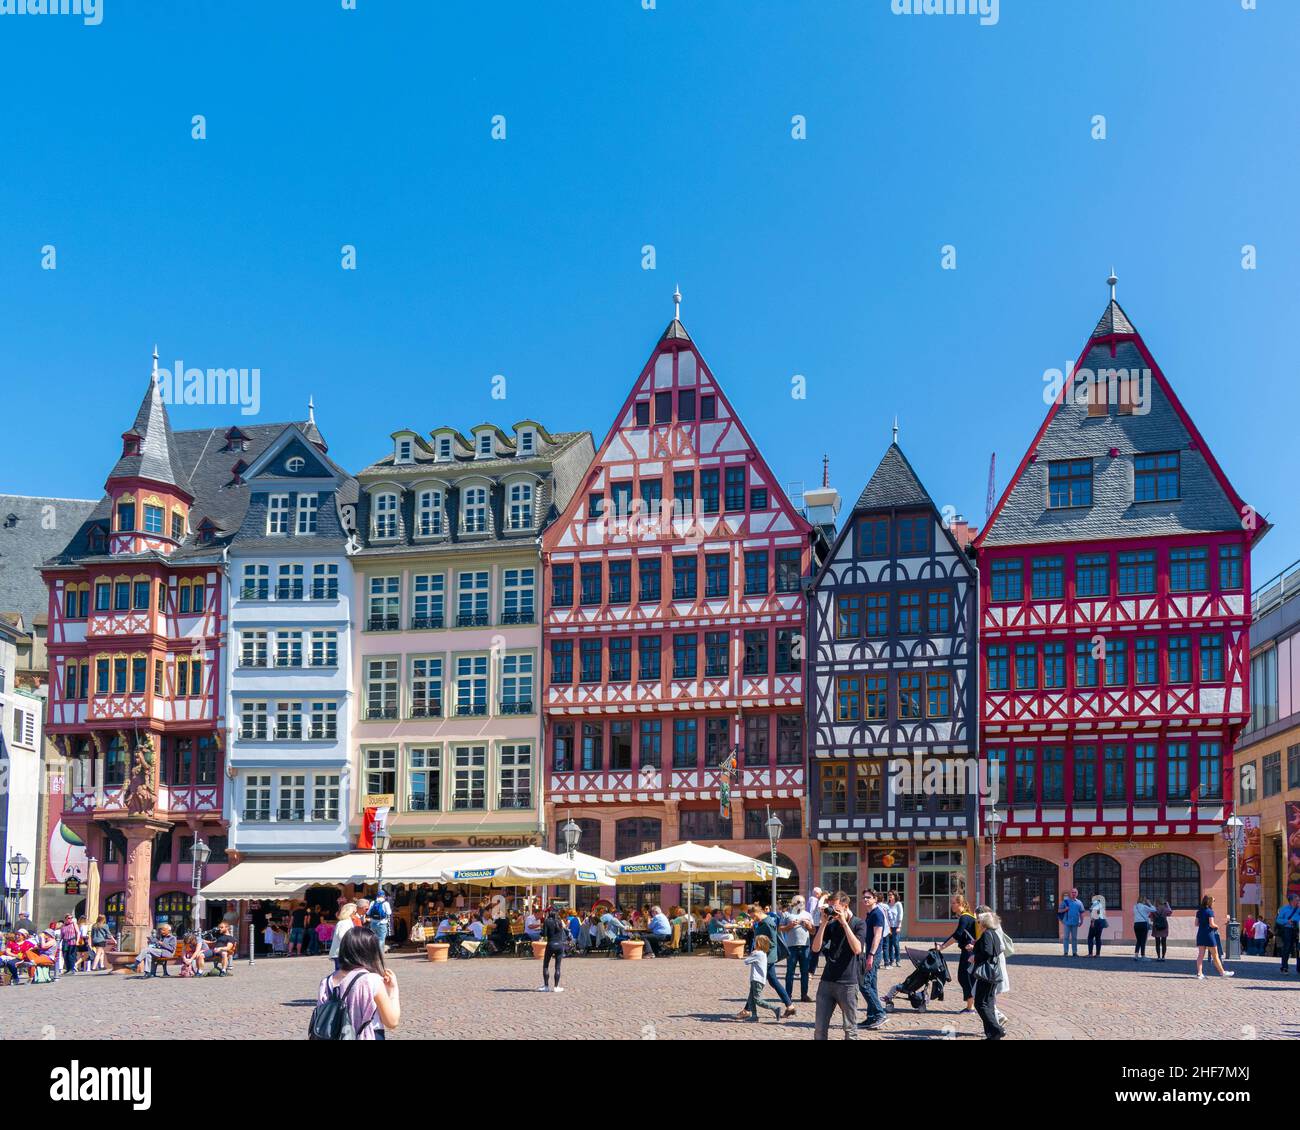 Vibrant half timber houses in Romerplatz Frankfurt Germany with tourists enjoying the sunshine Stock Photo